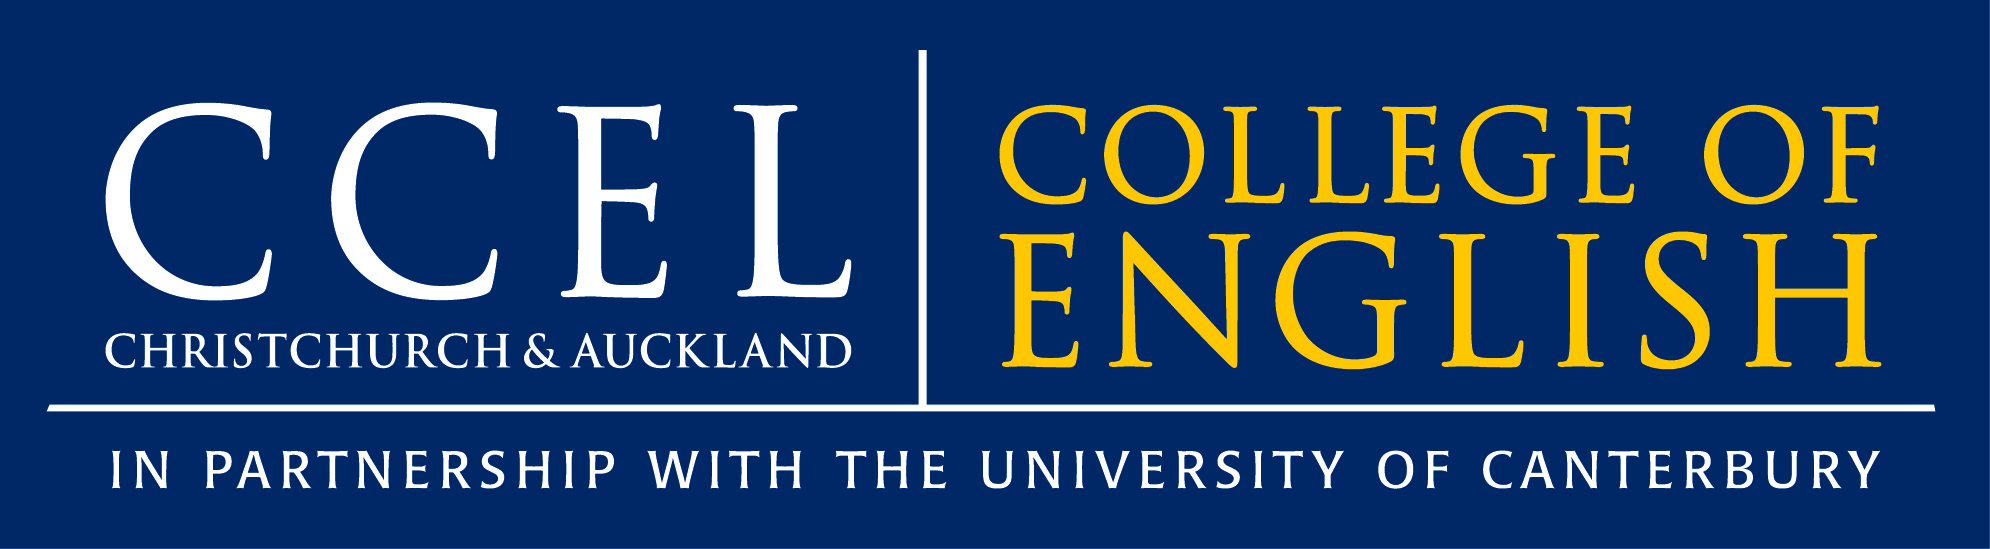 Английский колледж 4. Крацст Черч английски колледж. CCEL. National University of New Zealand logo. Wools of New Zealand logo vectors.